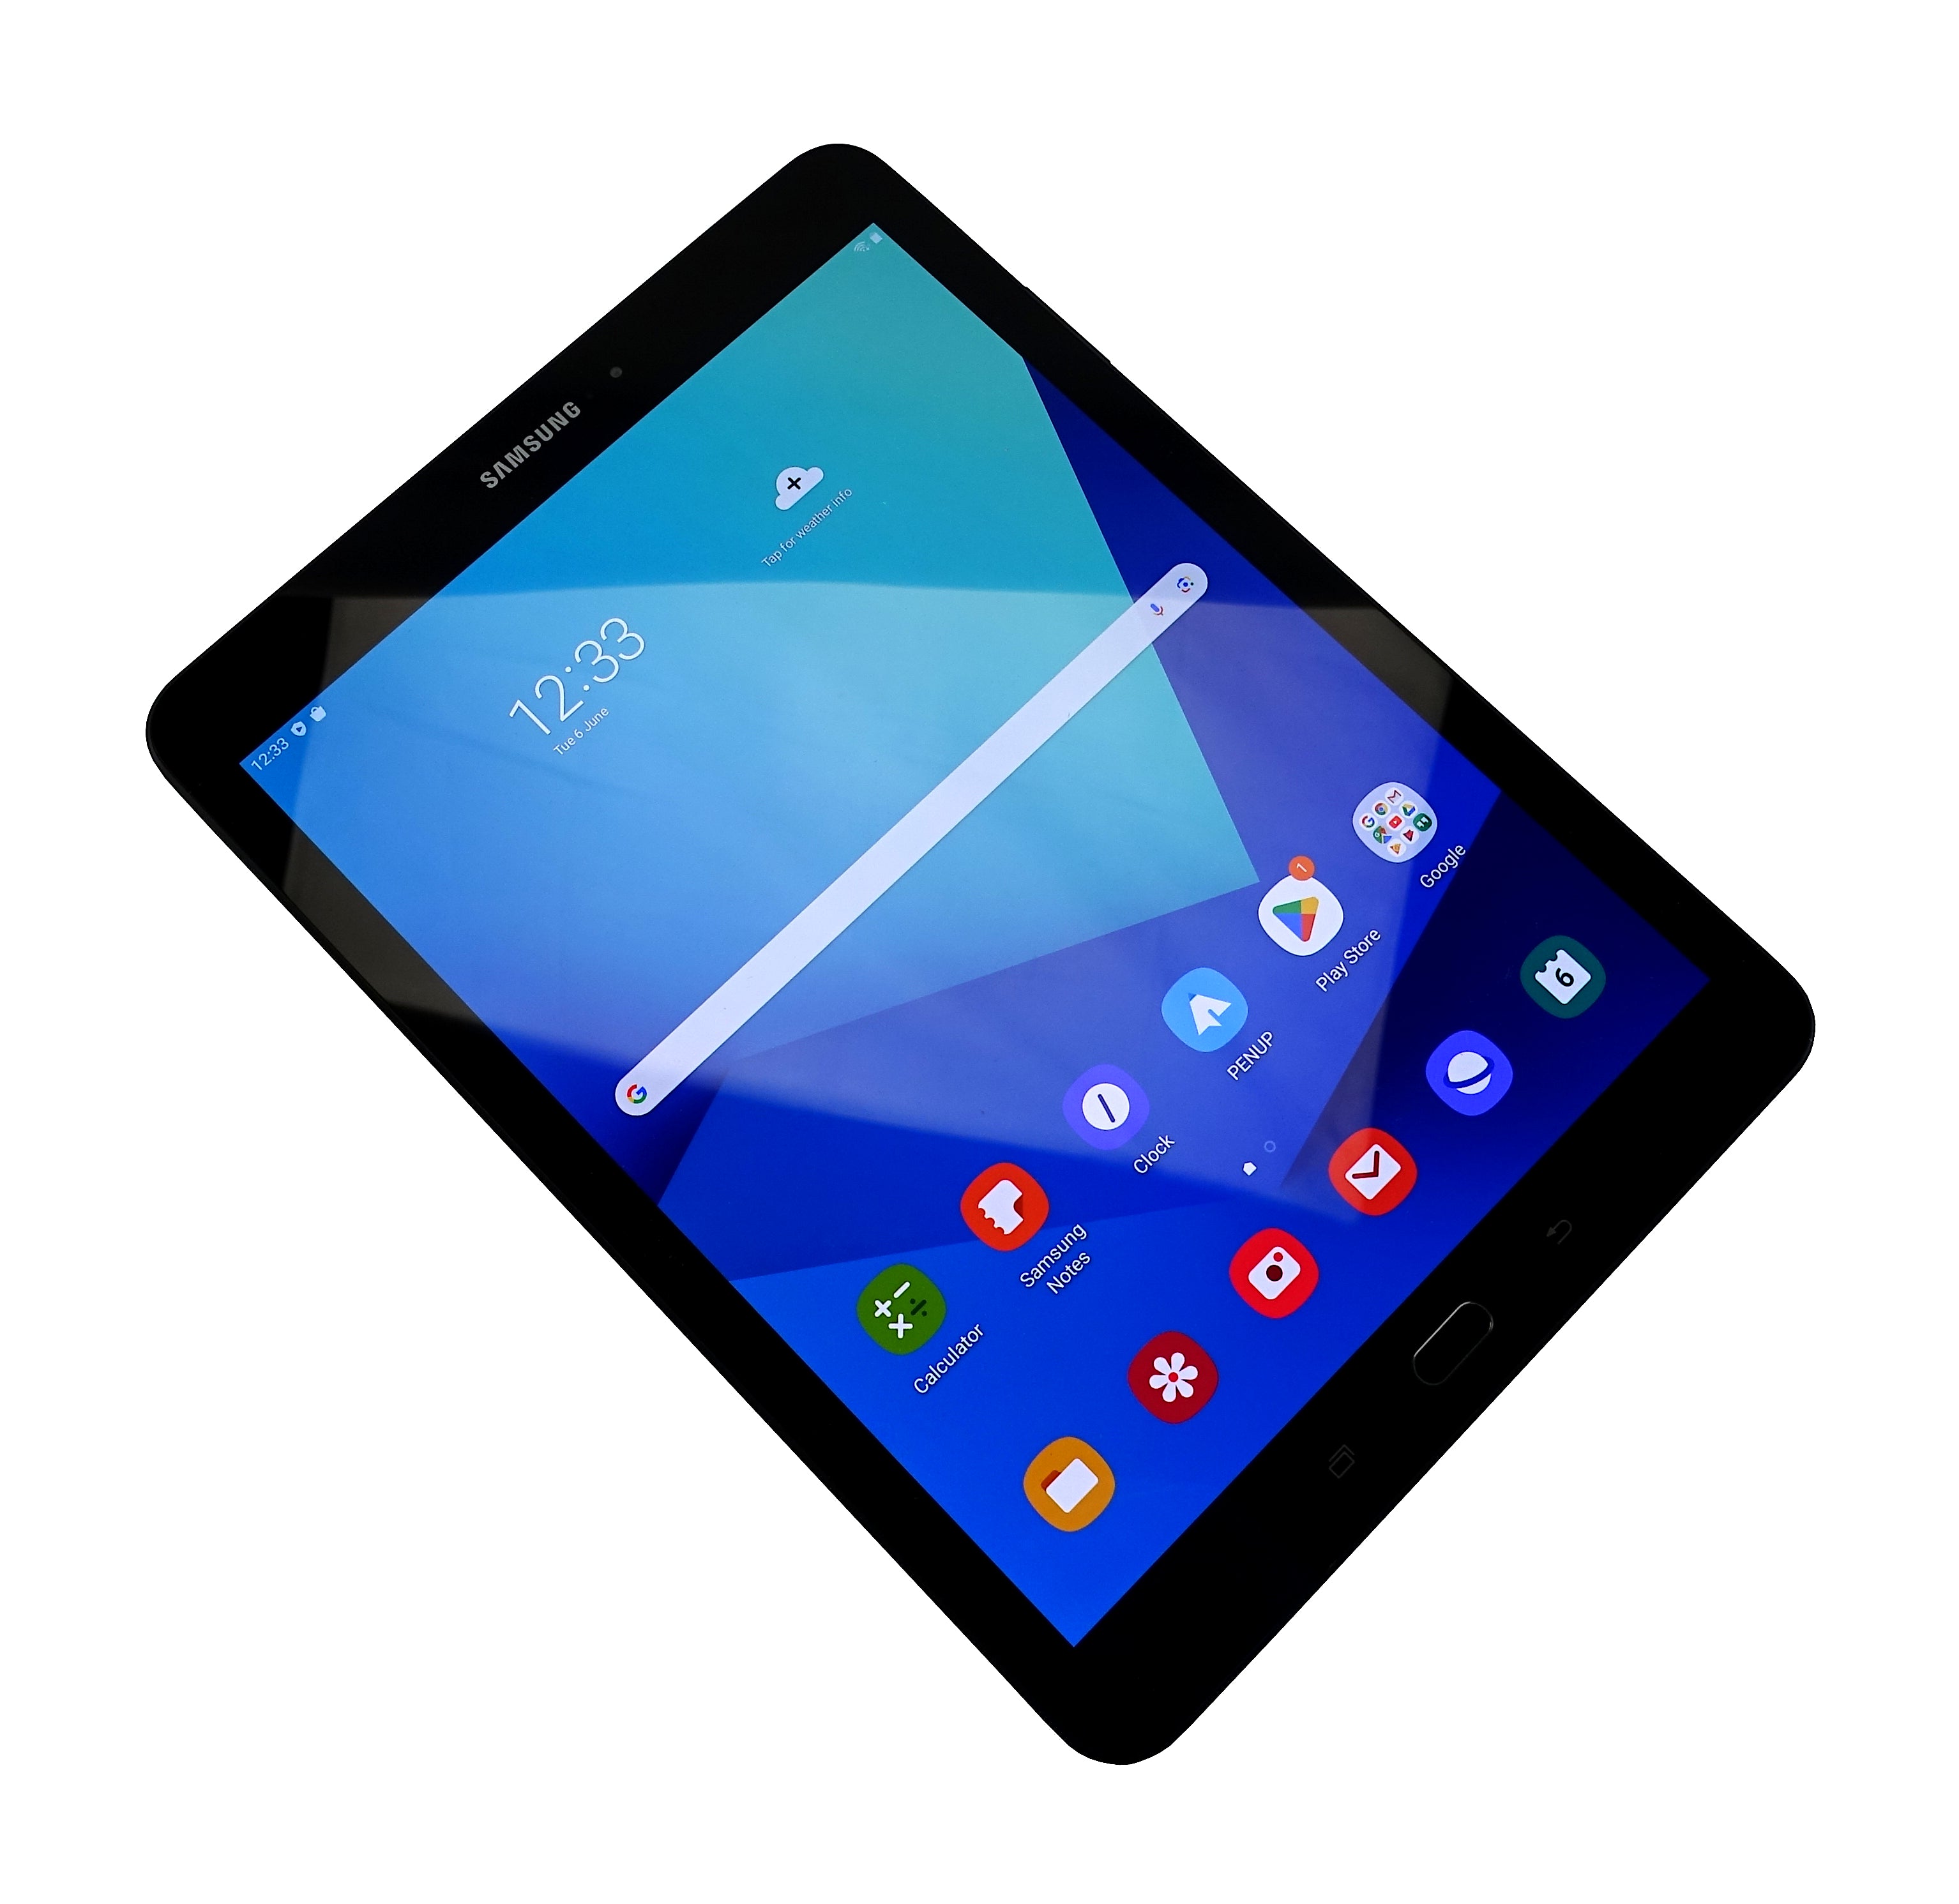 Samsung Galaxy Tab S3 Tablet, 9.7", 32GB, WiFi, Black, SM-T820